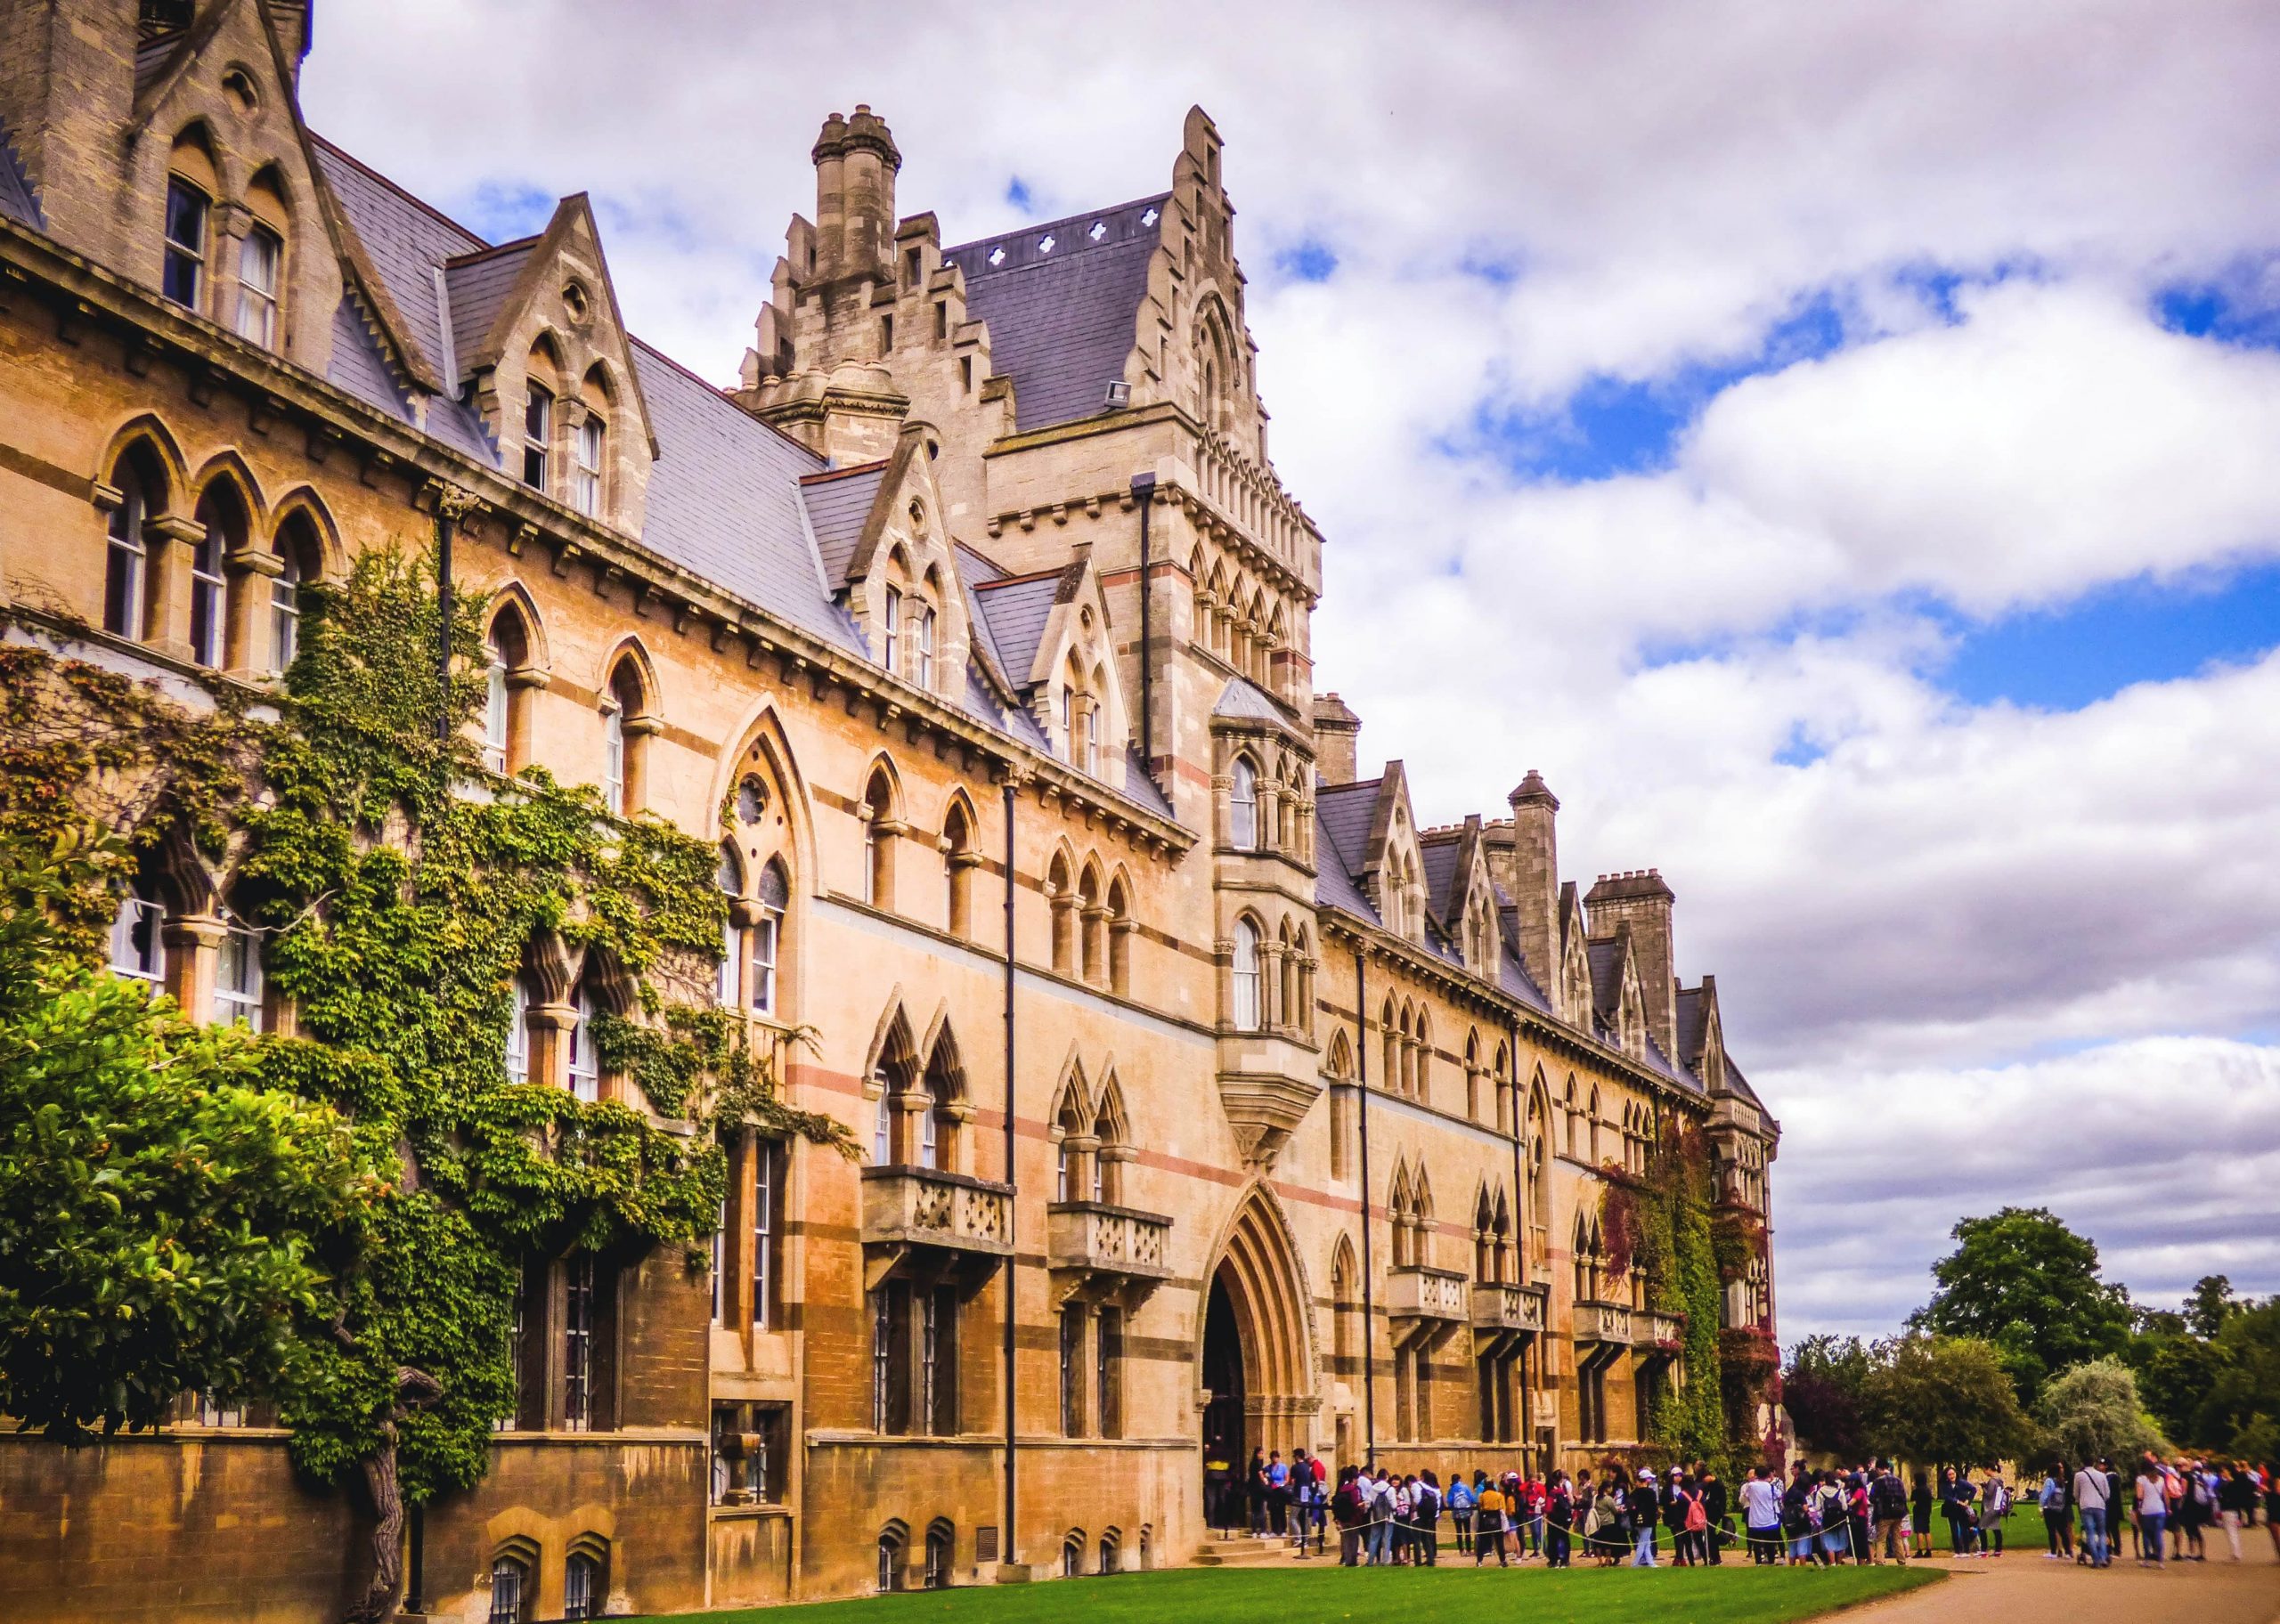 Reach Oxford Scholarship